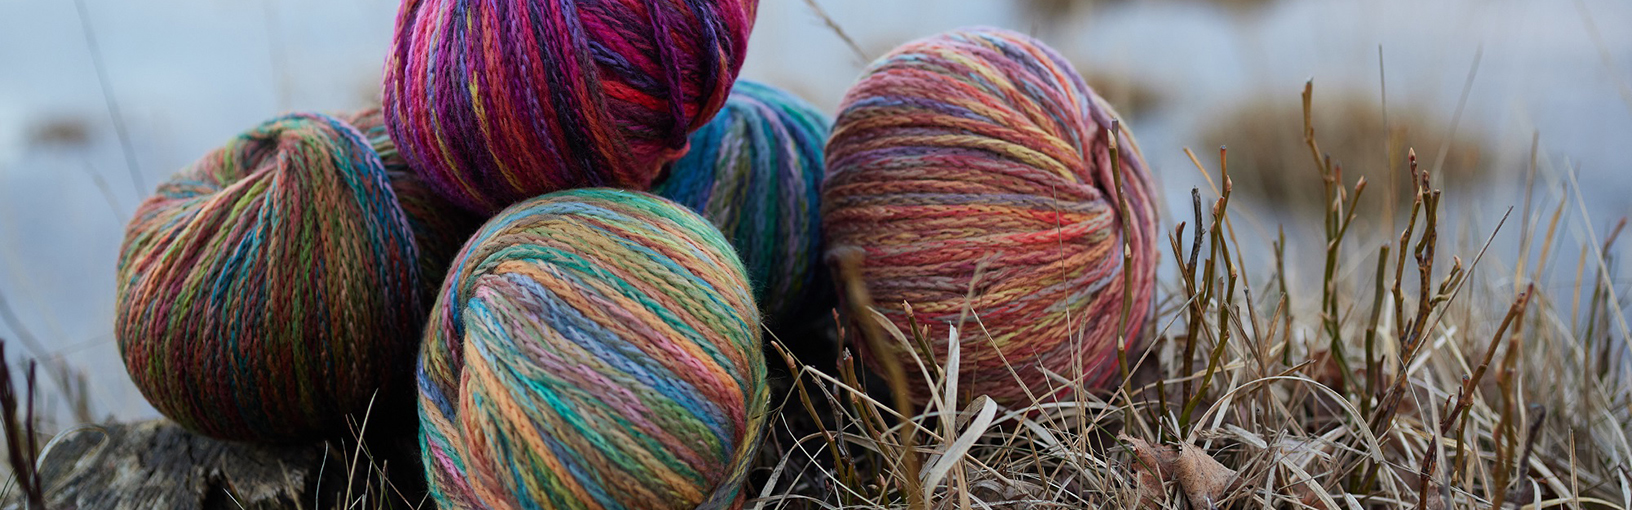 INNOVATIVE, ERGONOMIC - HIGHEST QUALITY Lana Grossa Needles | NEEDLE SETS | Sock knitting-Set